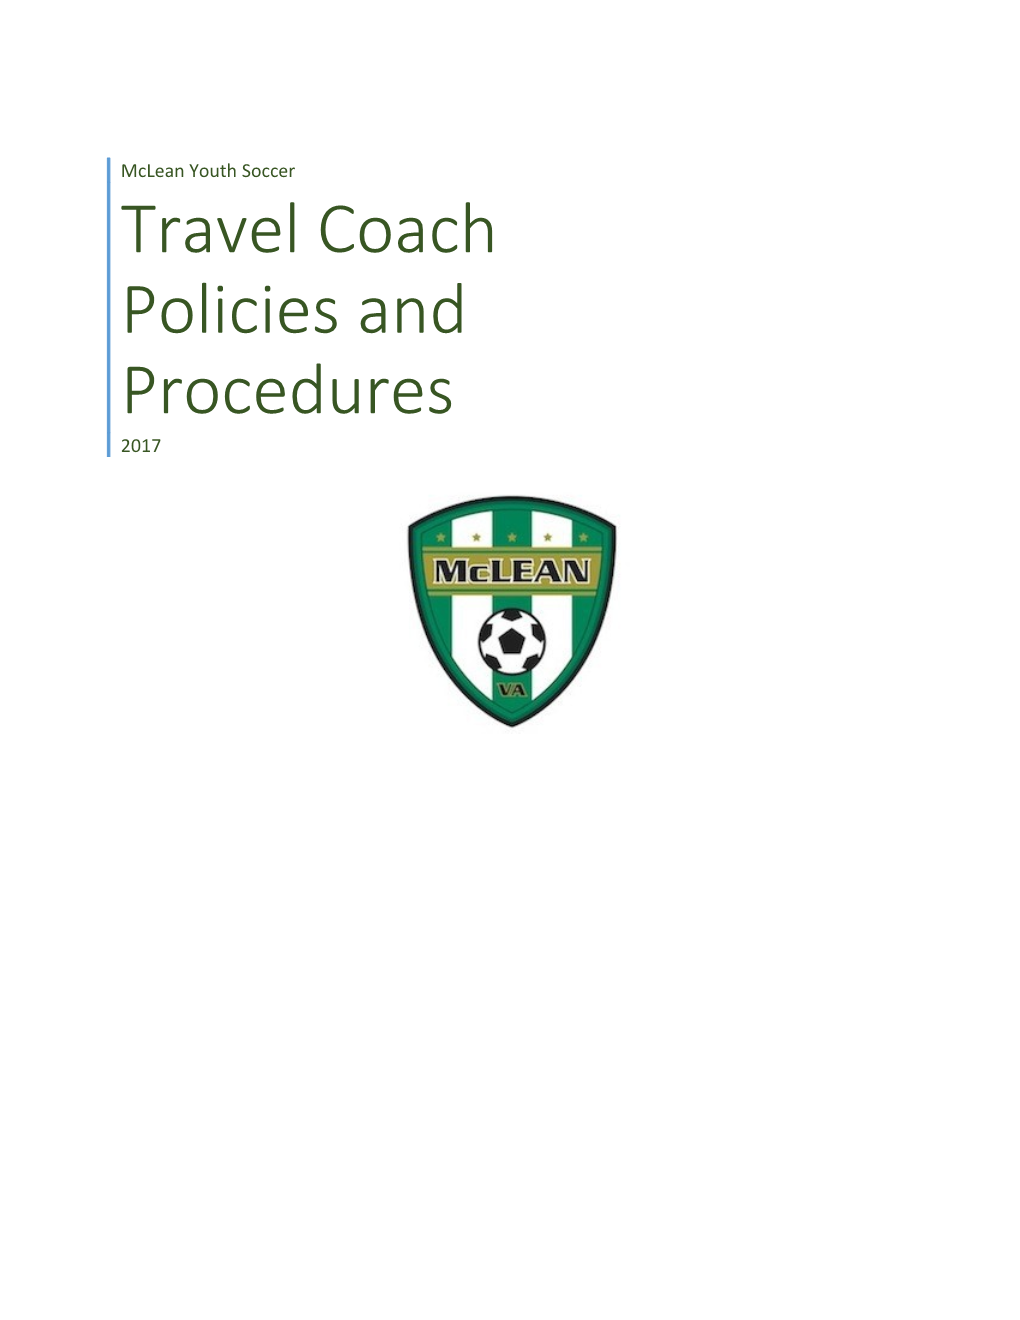 Travel Coach Policies and Procedures